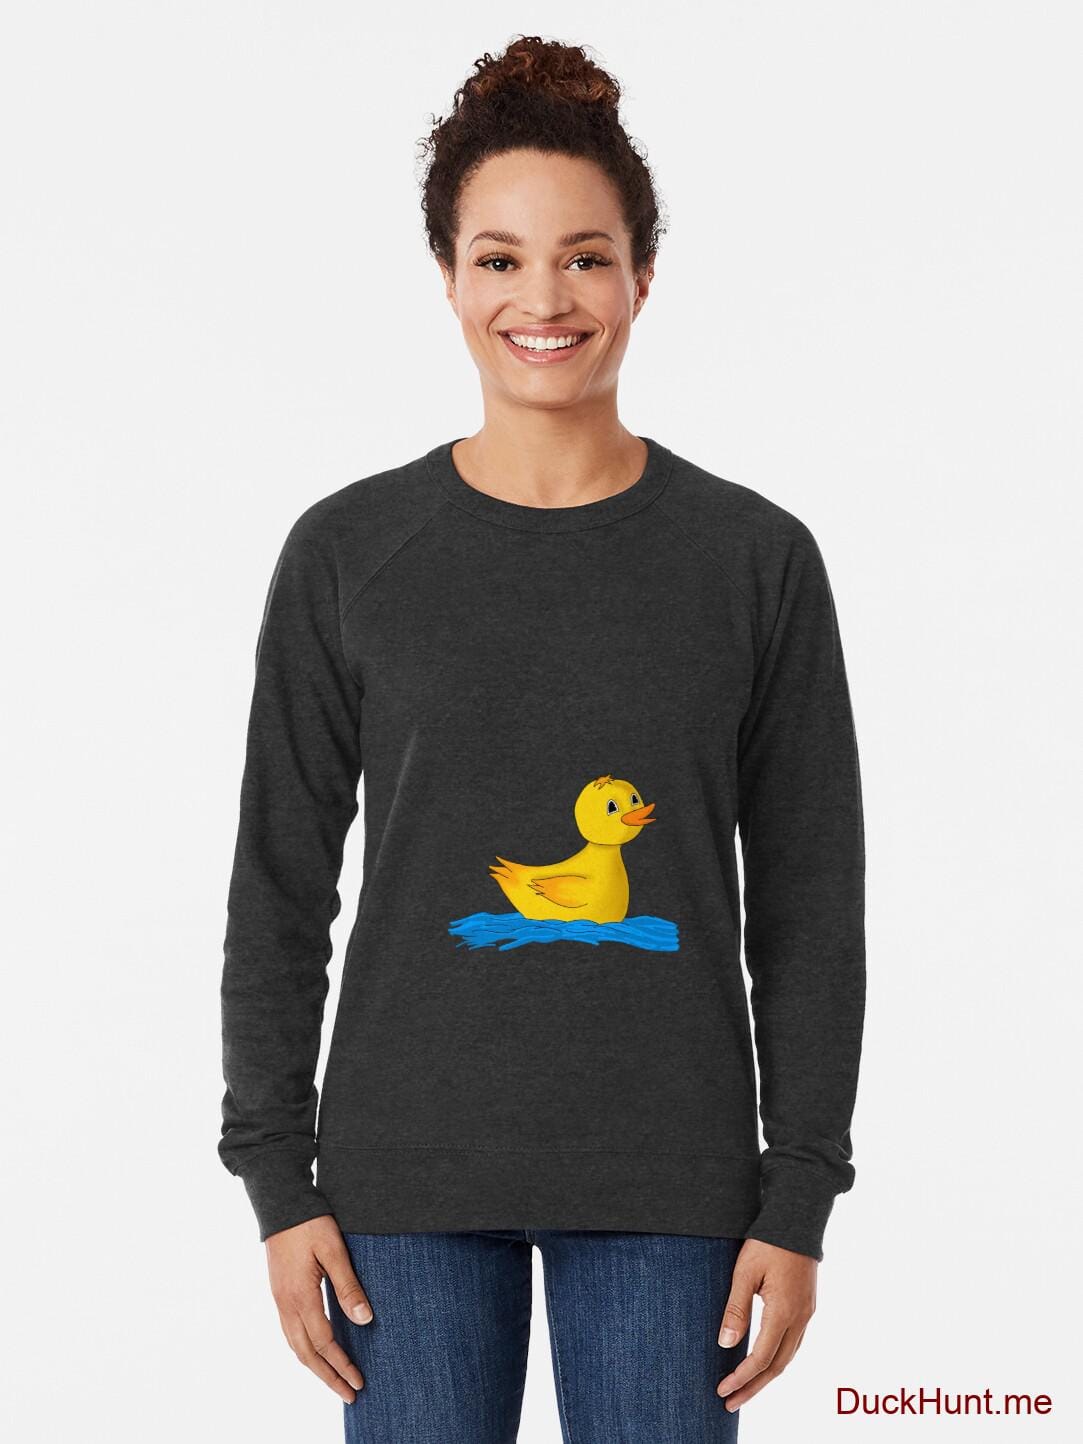 Plastic Duck Charcoal Lightweight Sweatshirt alternative image 1